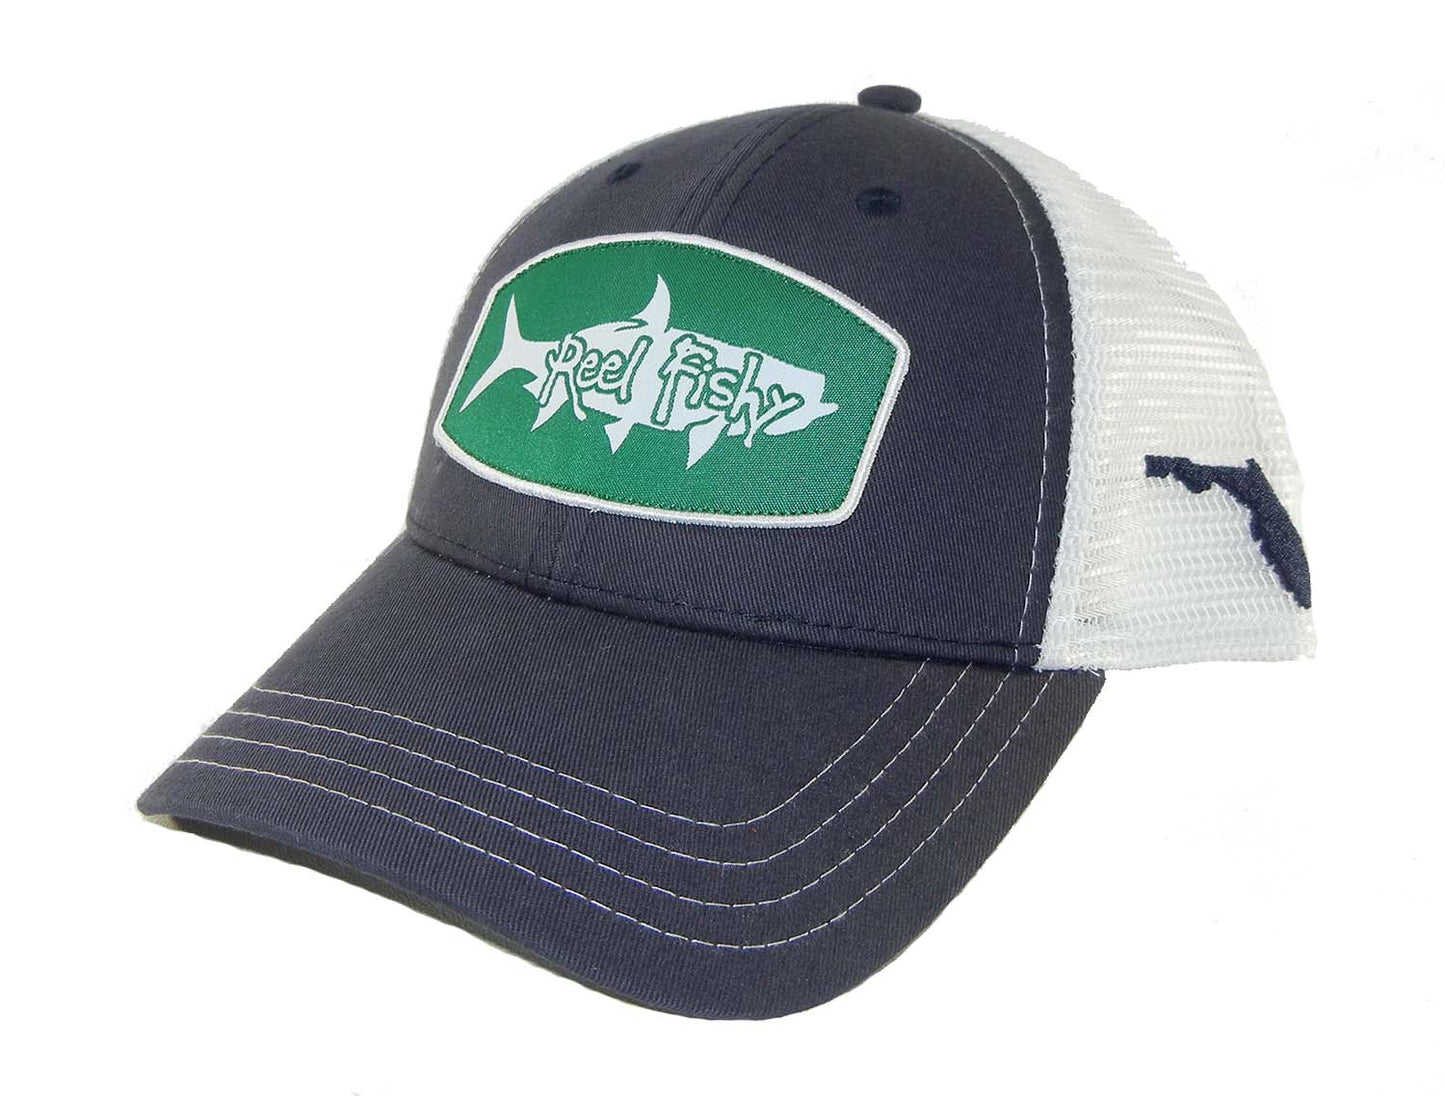 Navy/White Mesh Trucker Hat with Green Tarpon Patch